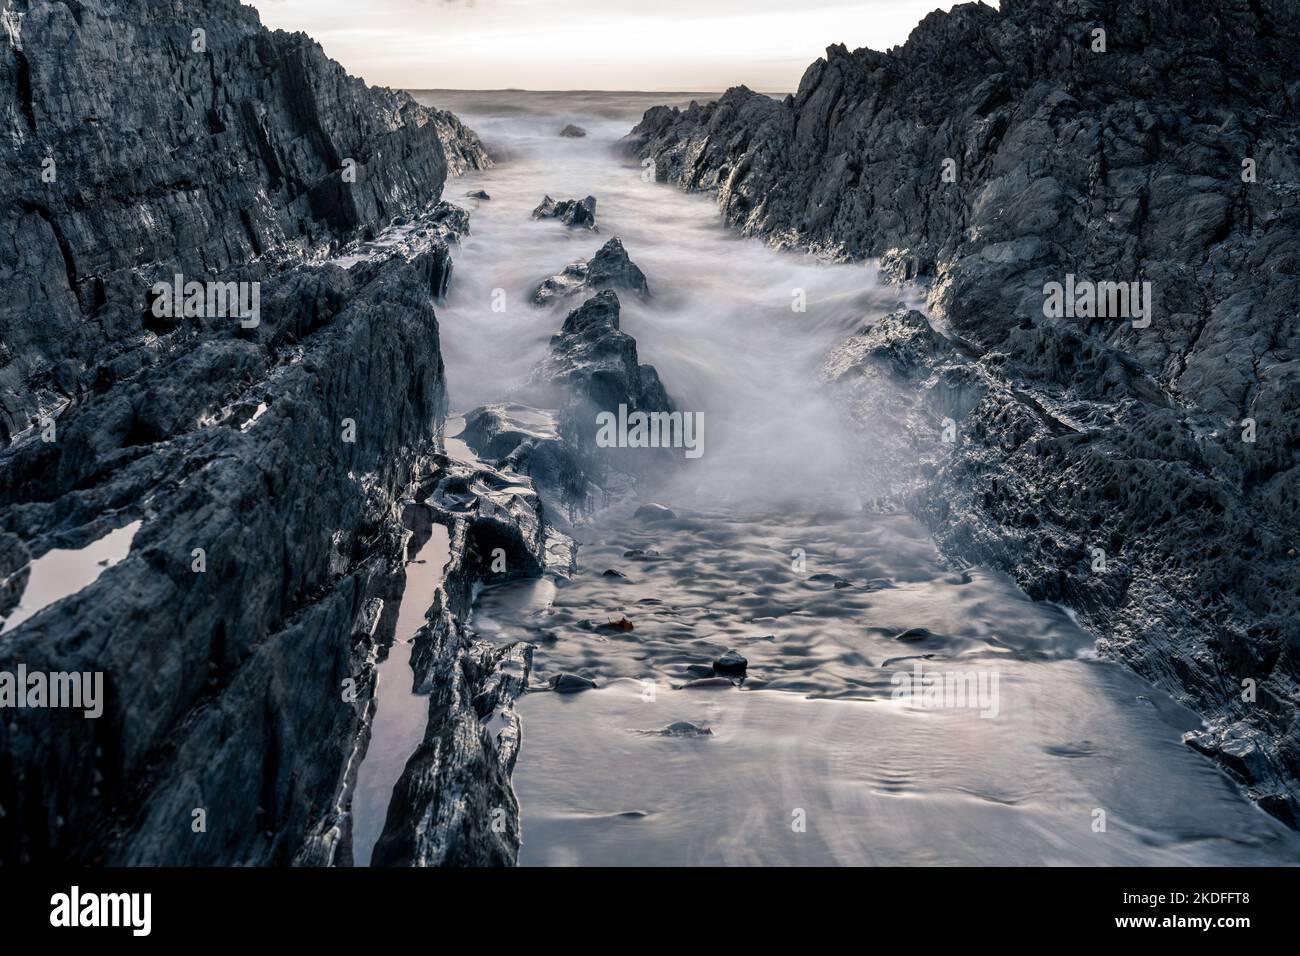 Marea entrante in un torrente roccioso Foto Stock